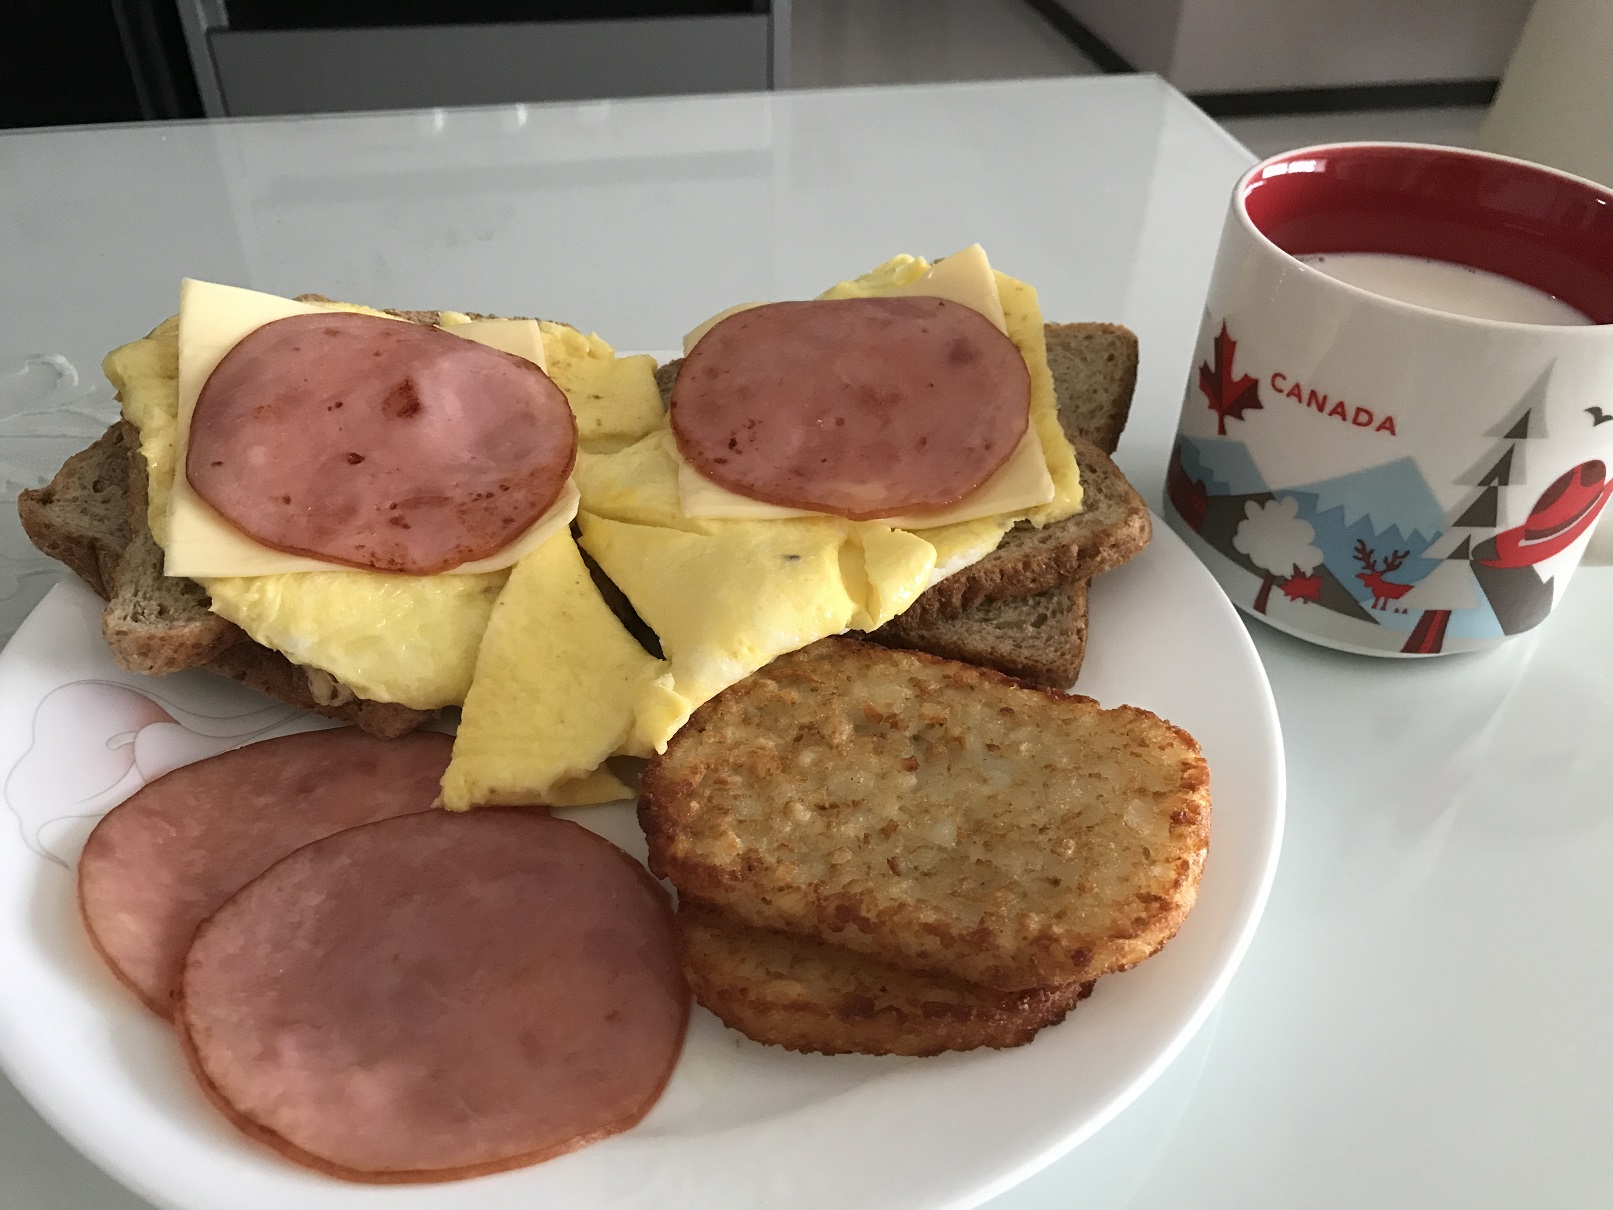 Heavy breakfast for a heavy day!